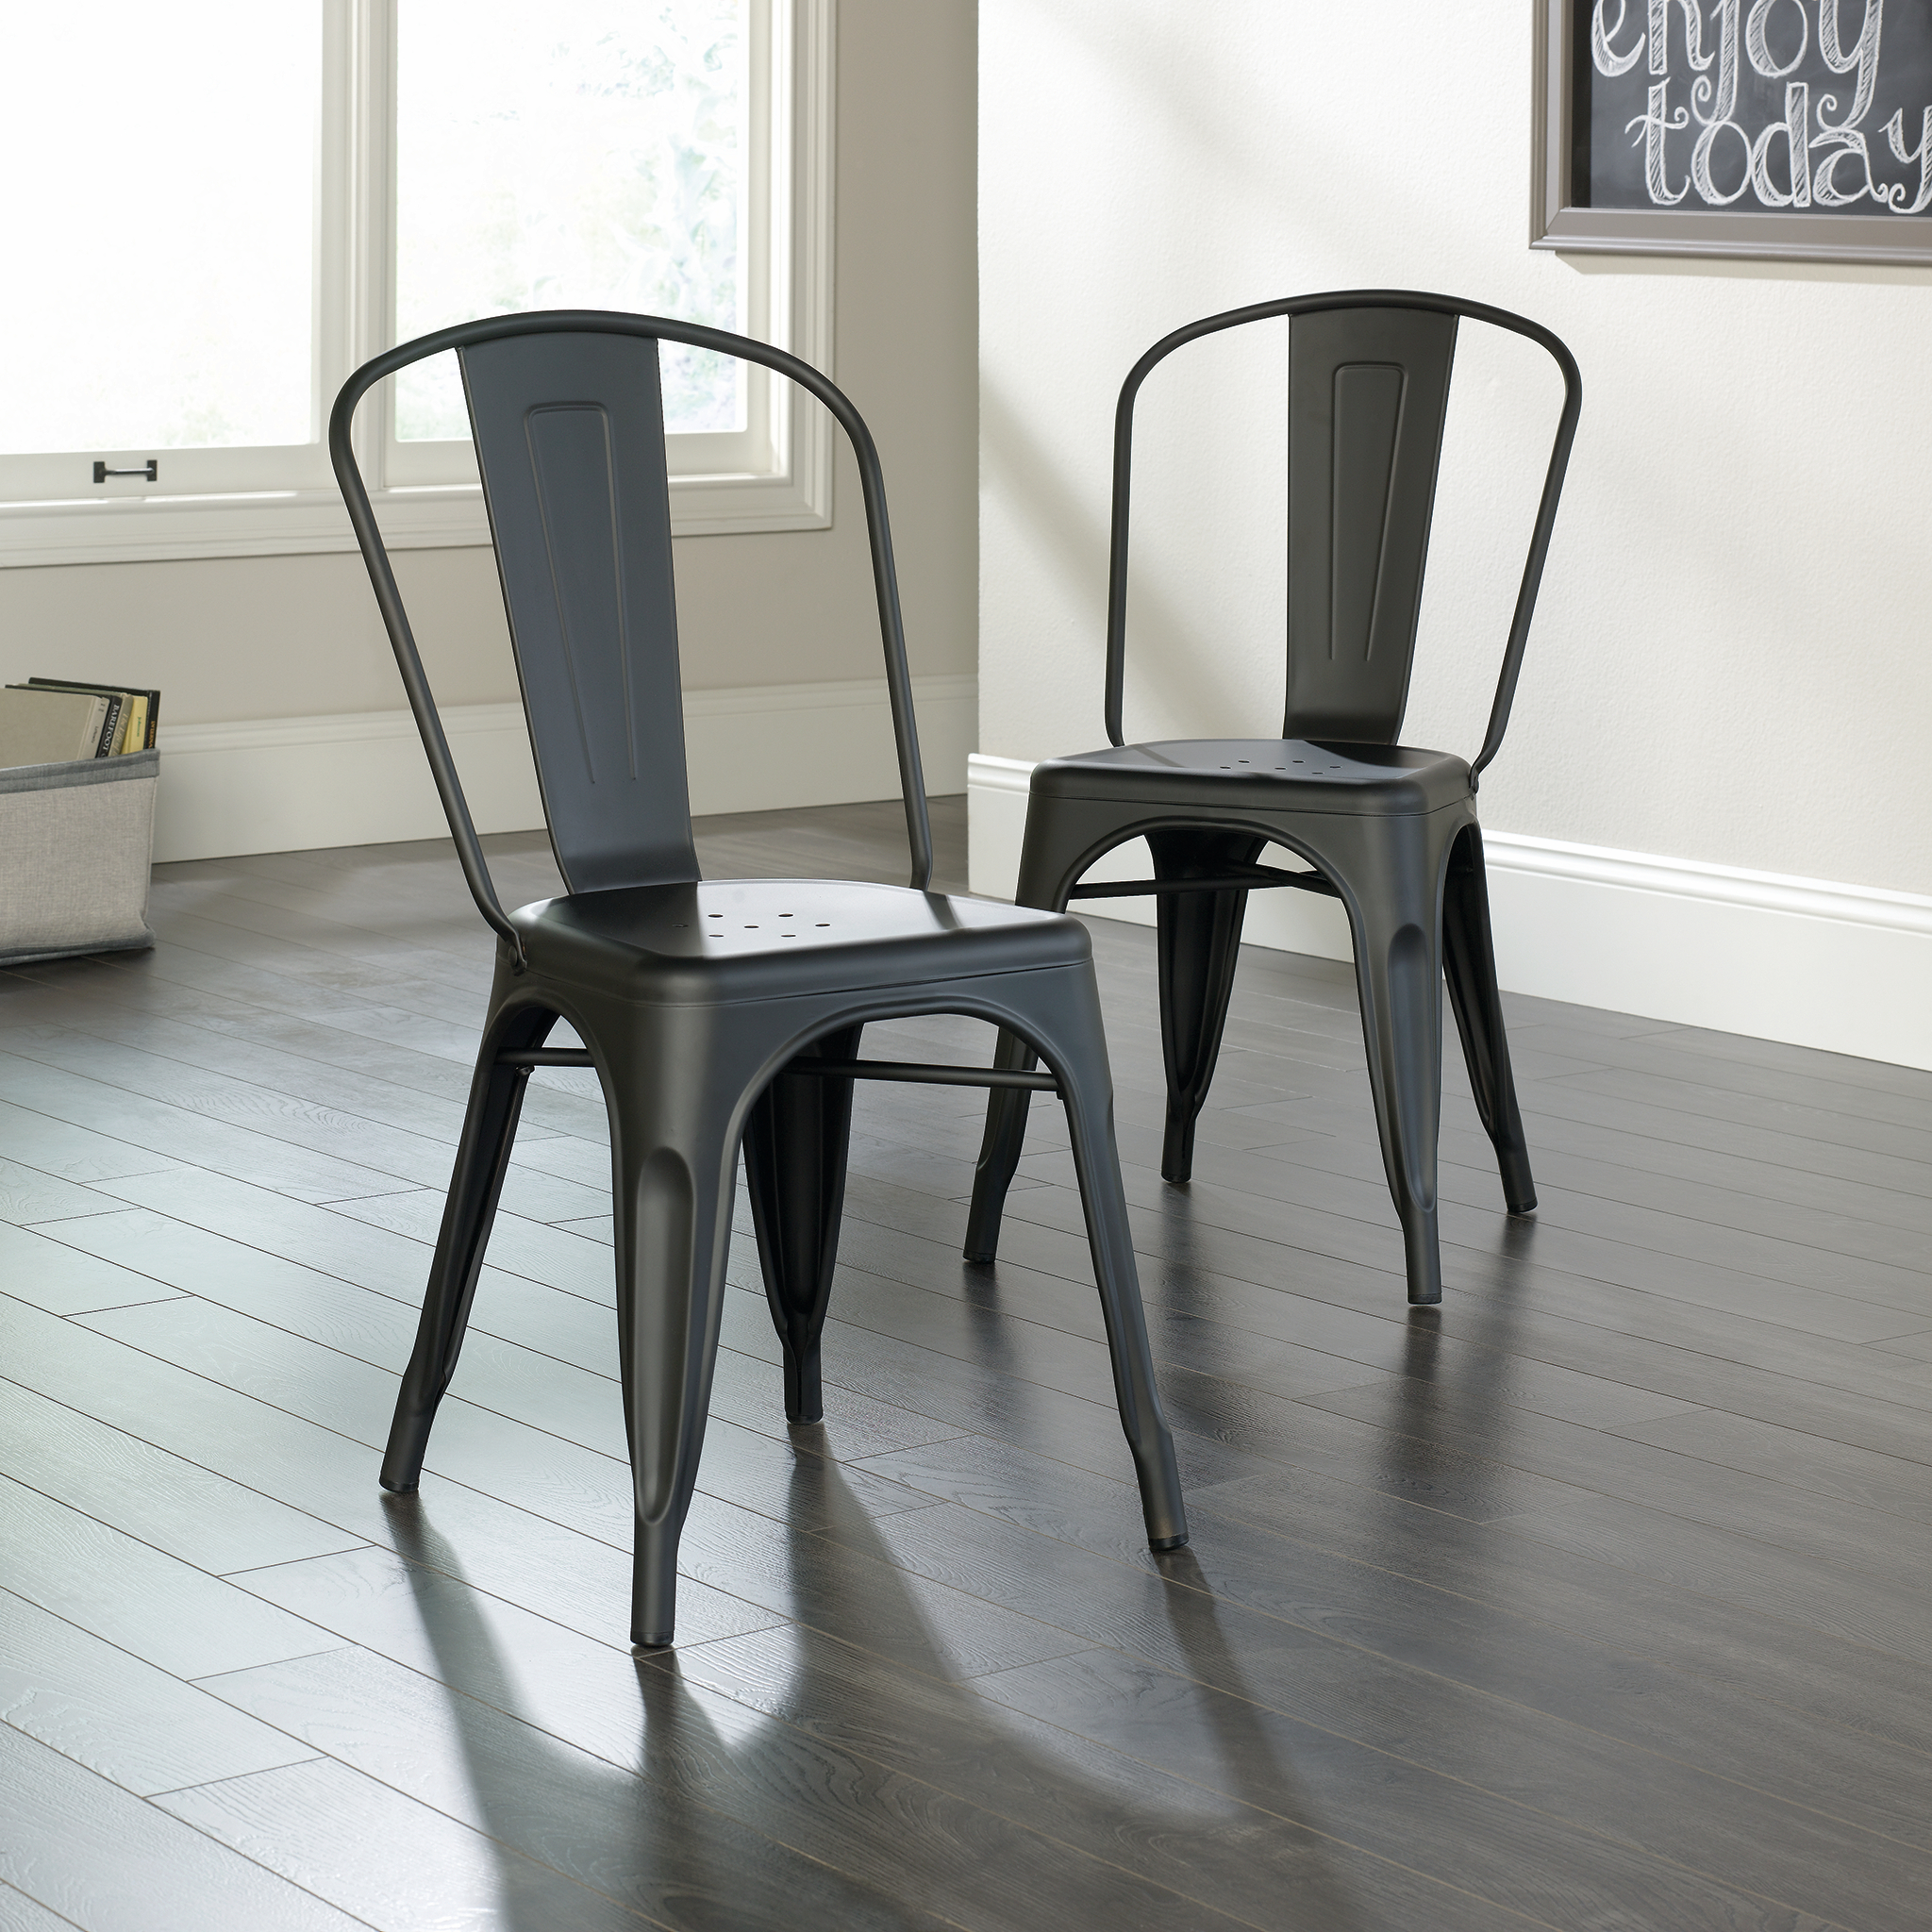 UPC 042666012621 product image for Sauder Metal CafÃ© Dining Chair 2pk | upcitemdb.com